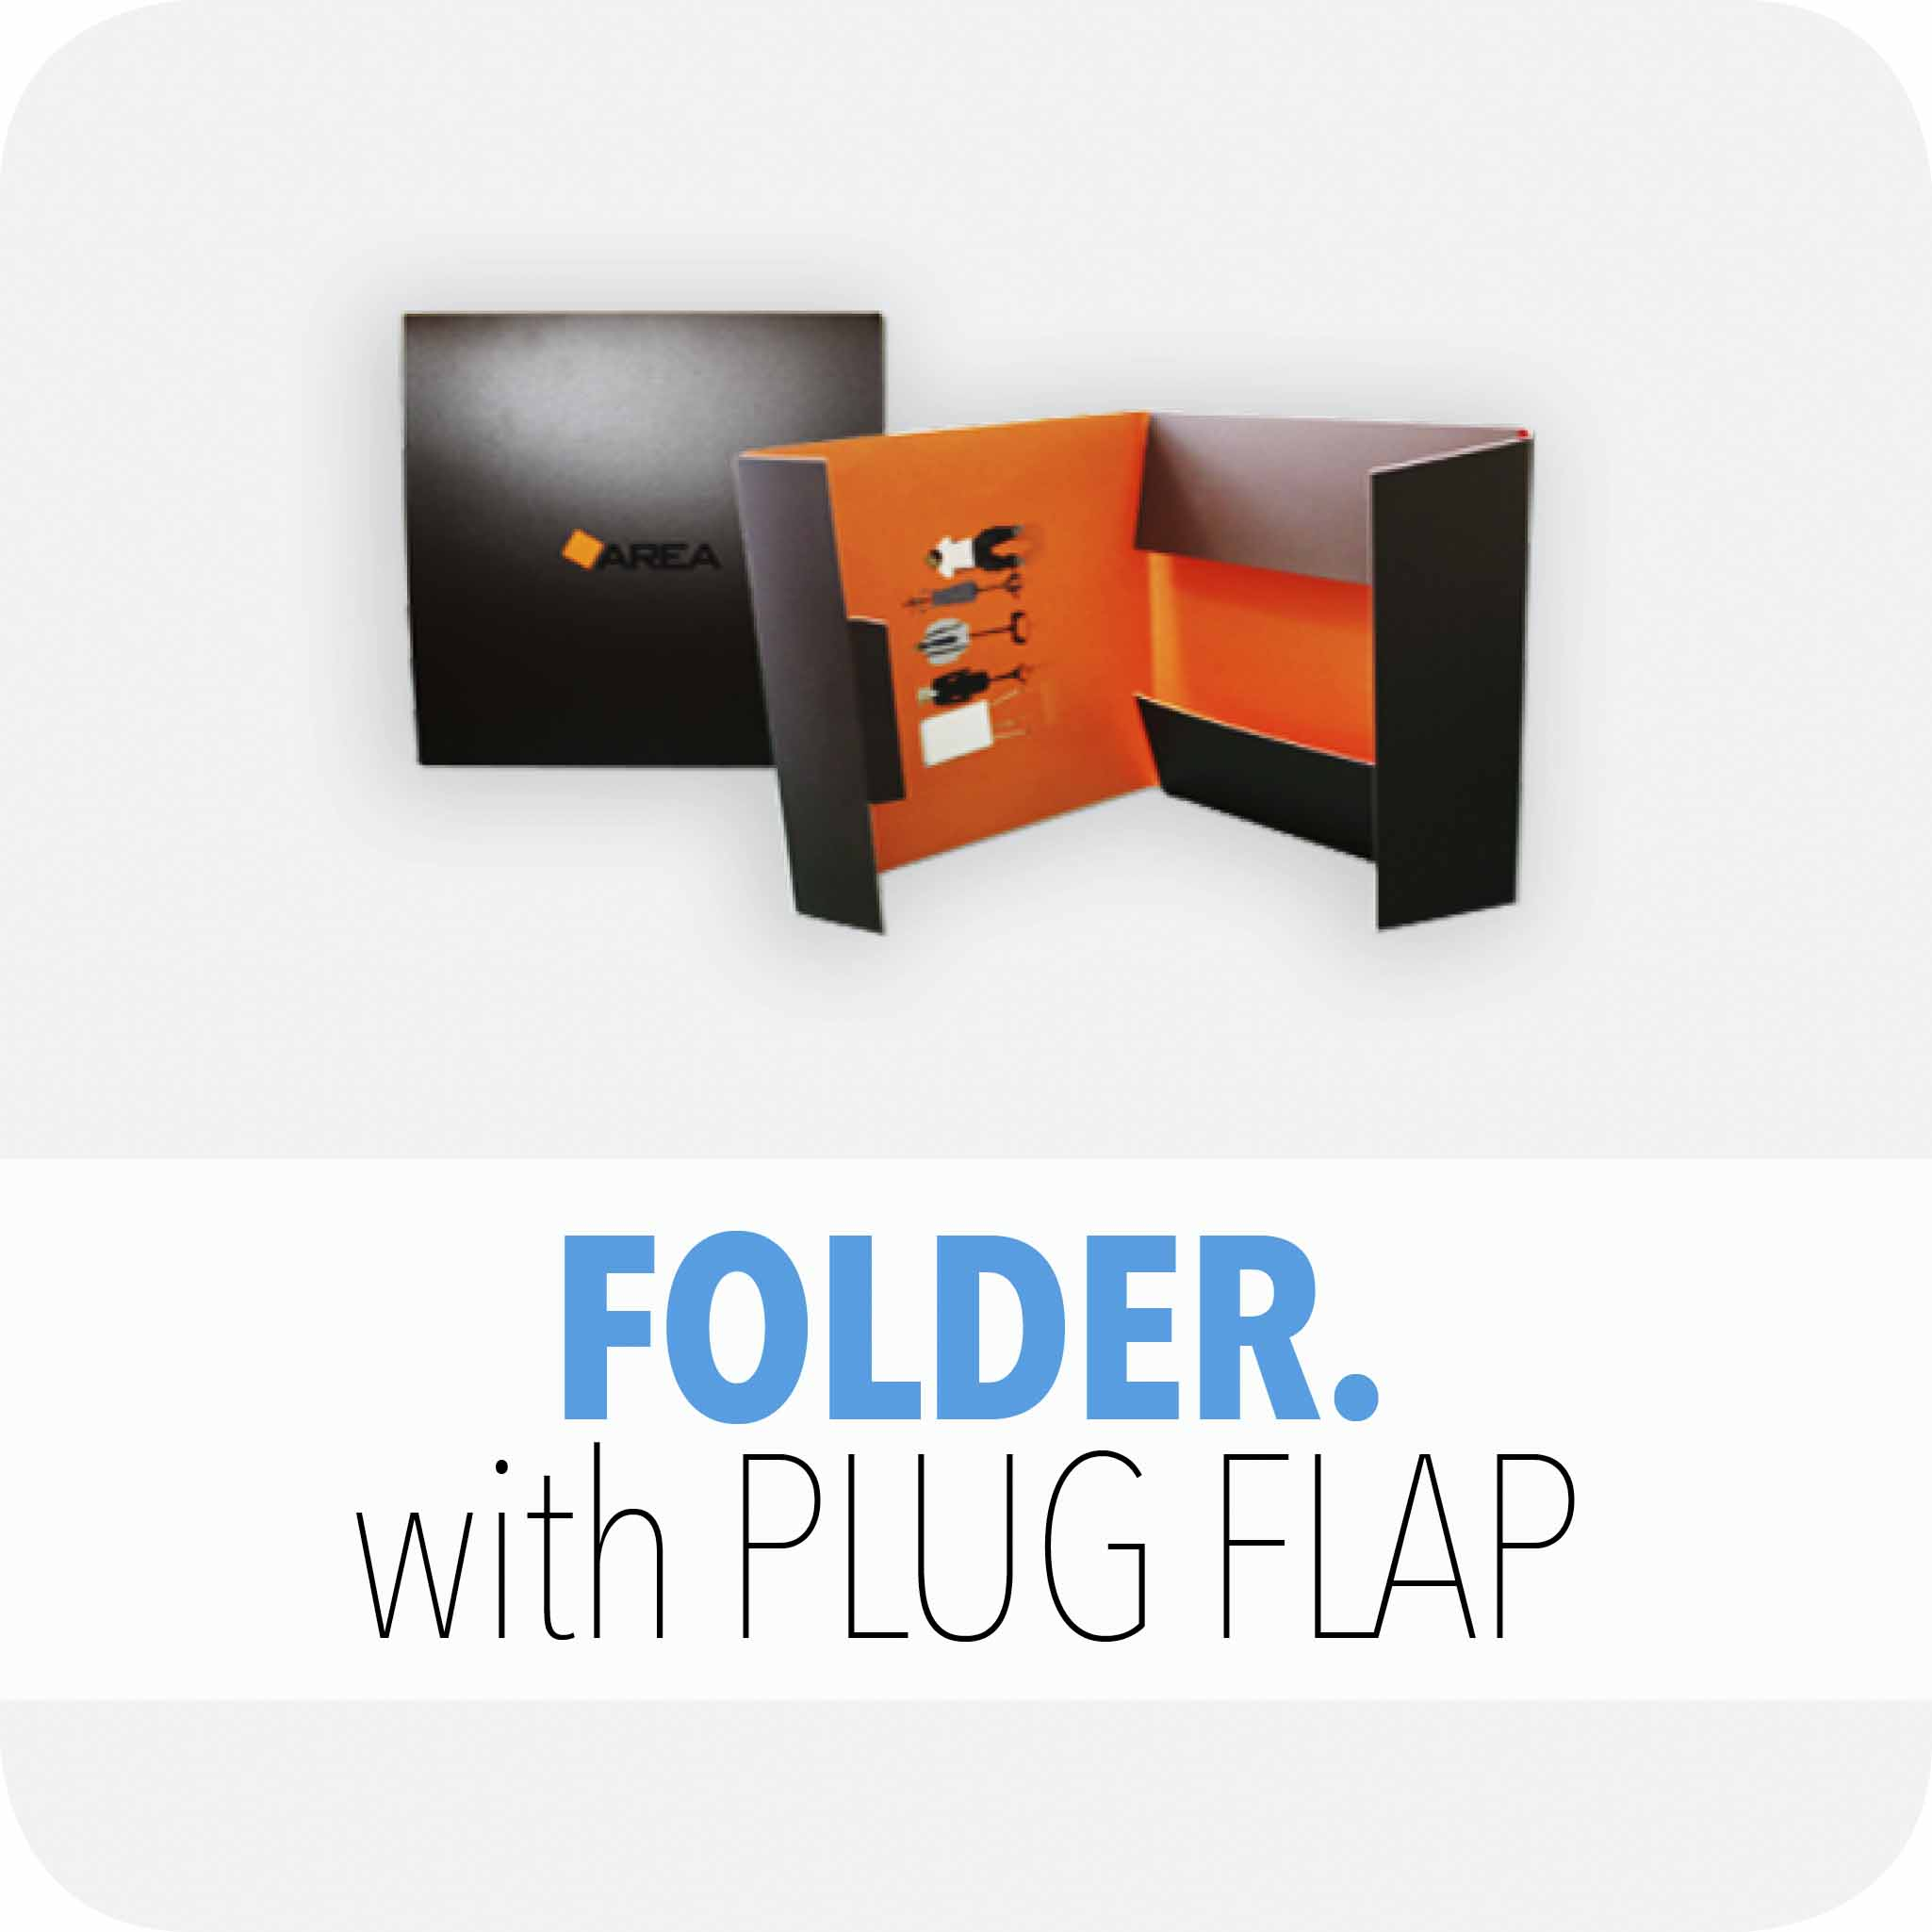 Folder with plug flap